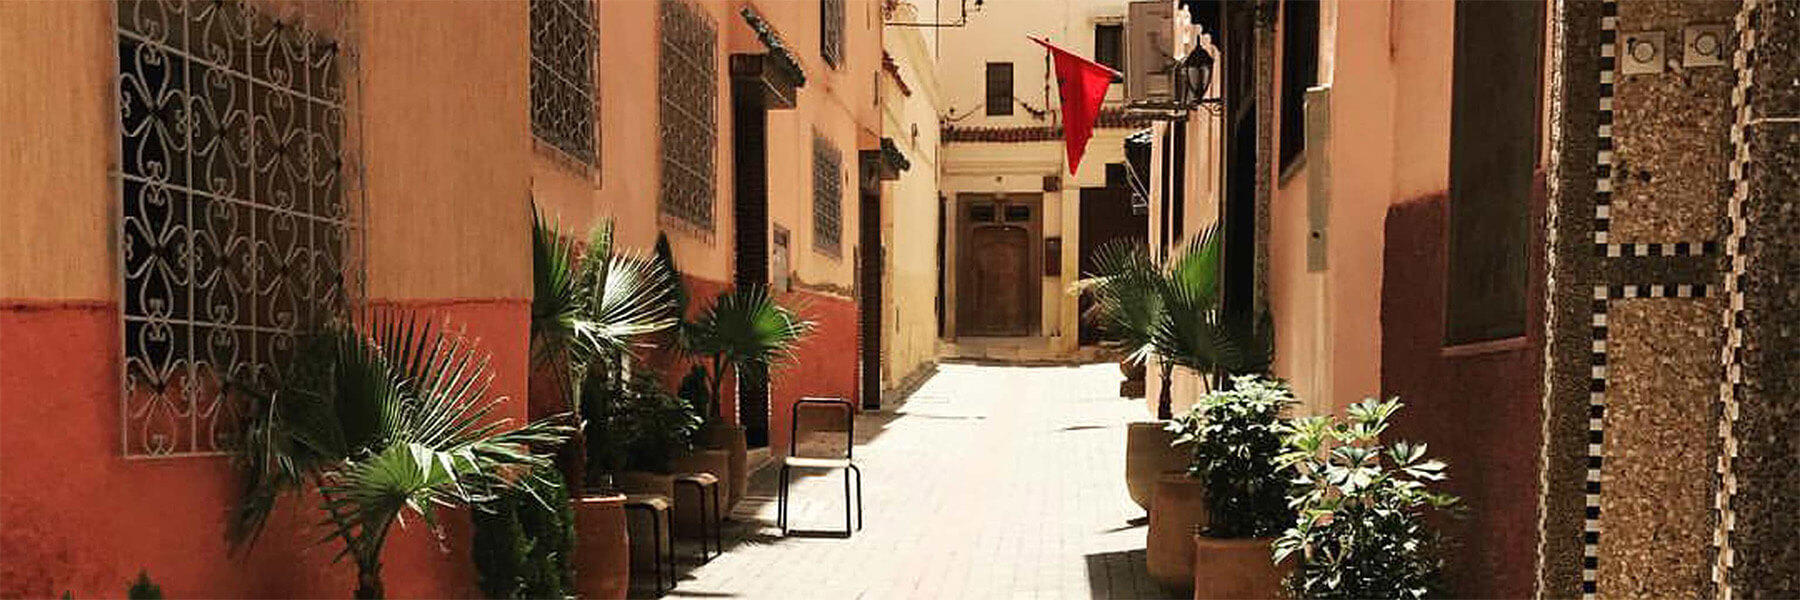 Arabic decorated alleyway